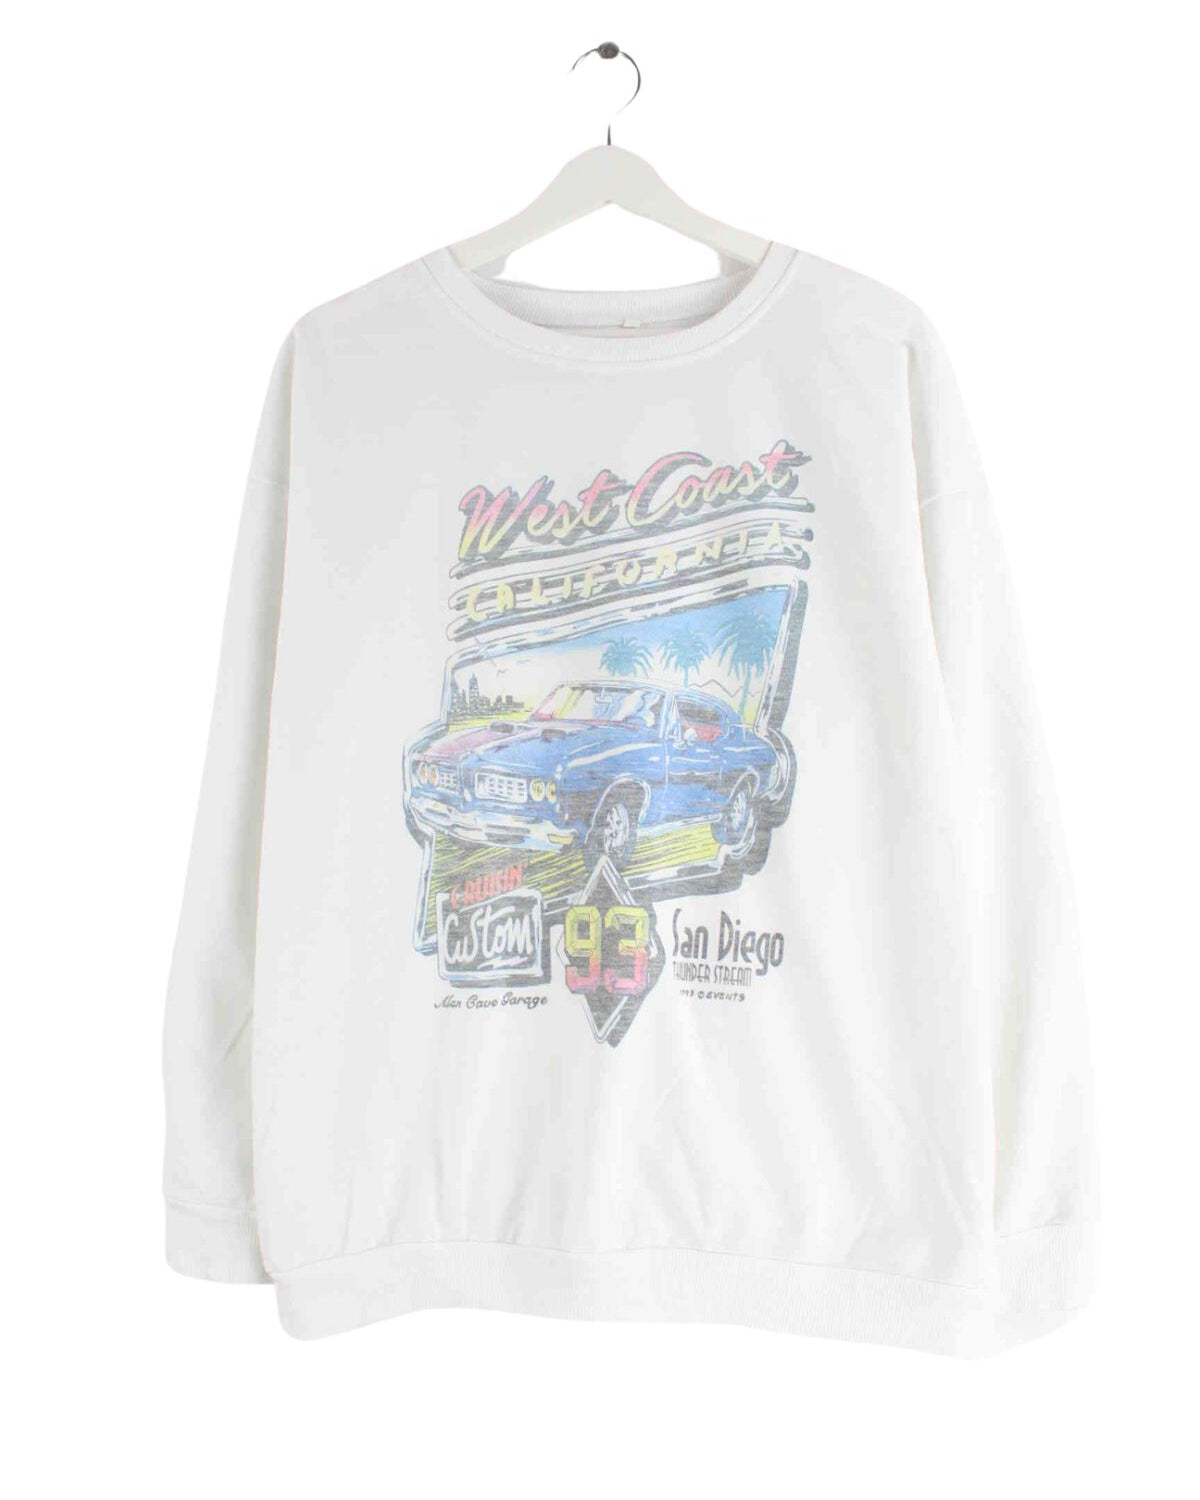 Vintage 1993 San Diego Thunderstream Sweater Weiß L (front image)